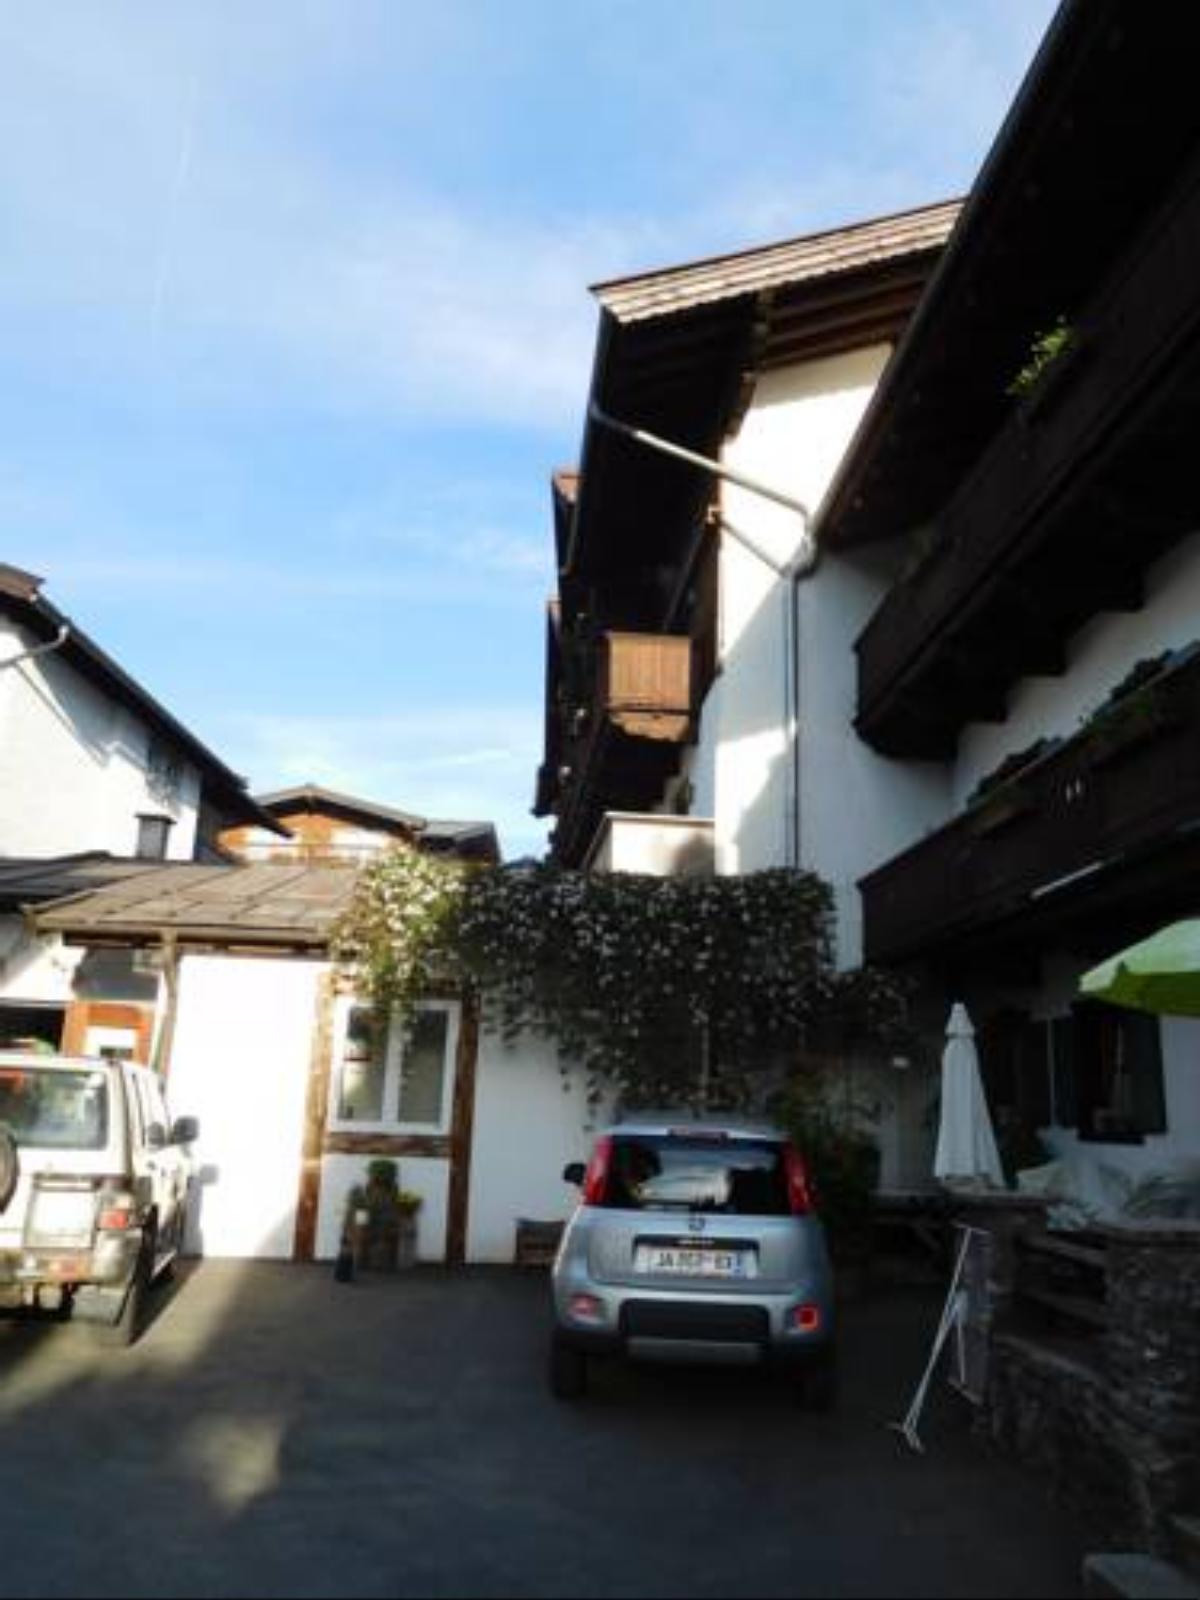 Appartements Kirchenwirt Hotel Kirchberg in Tirol Austria